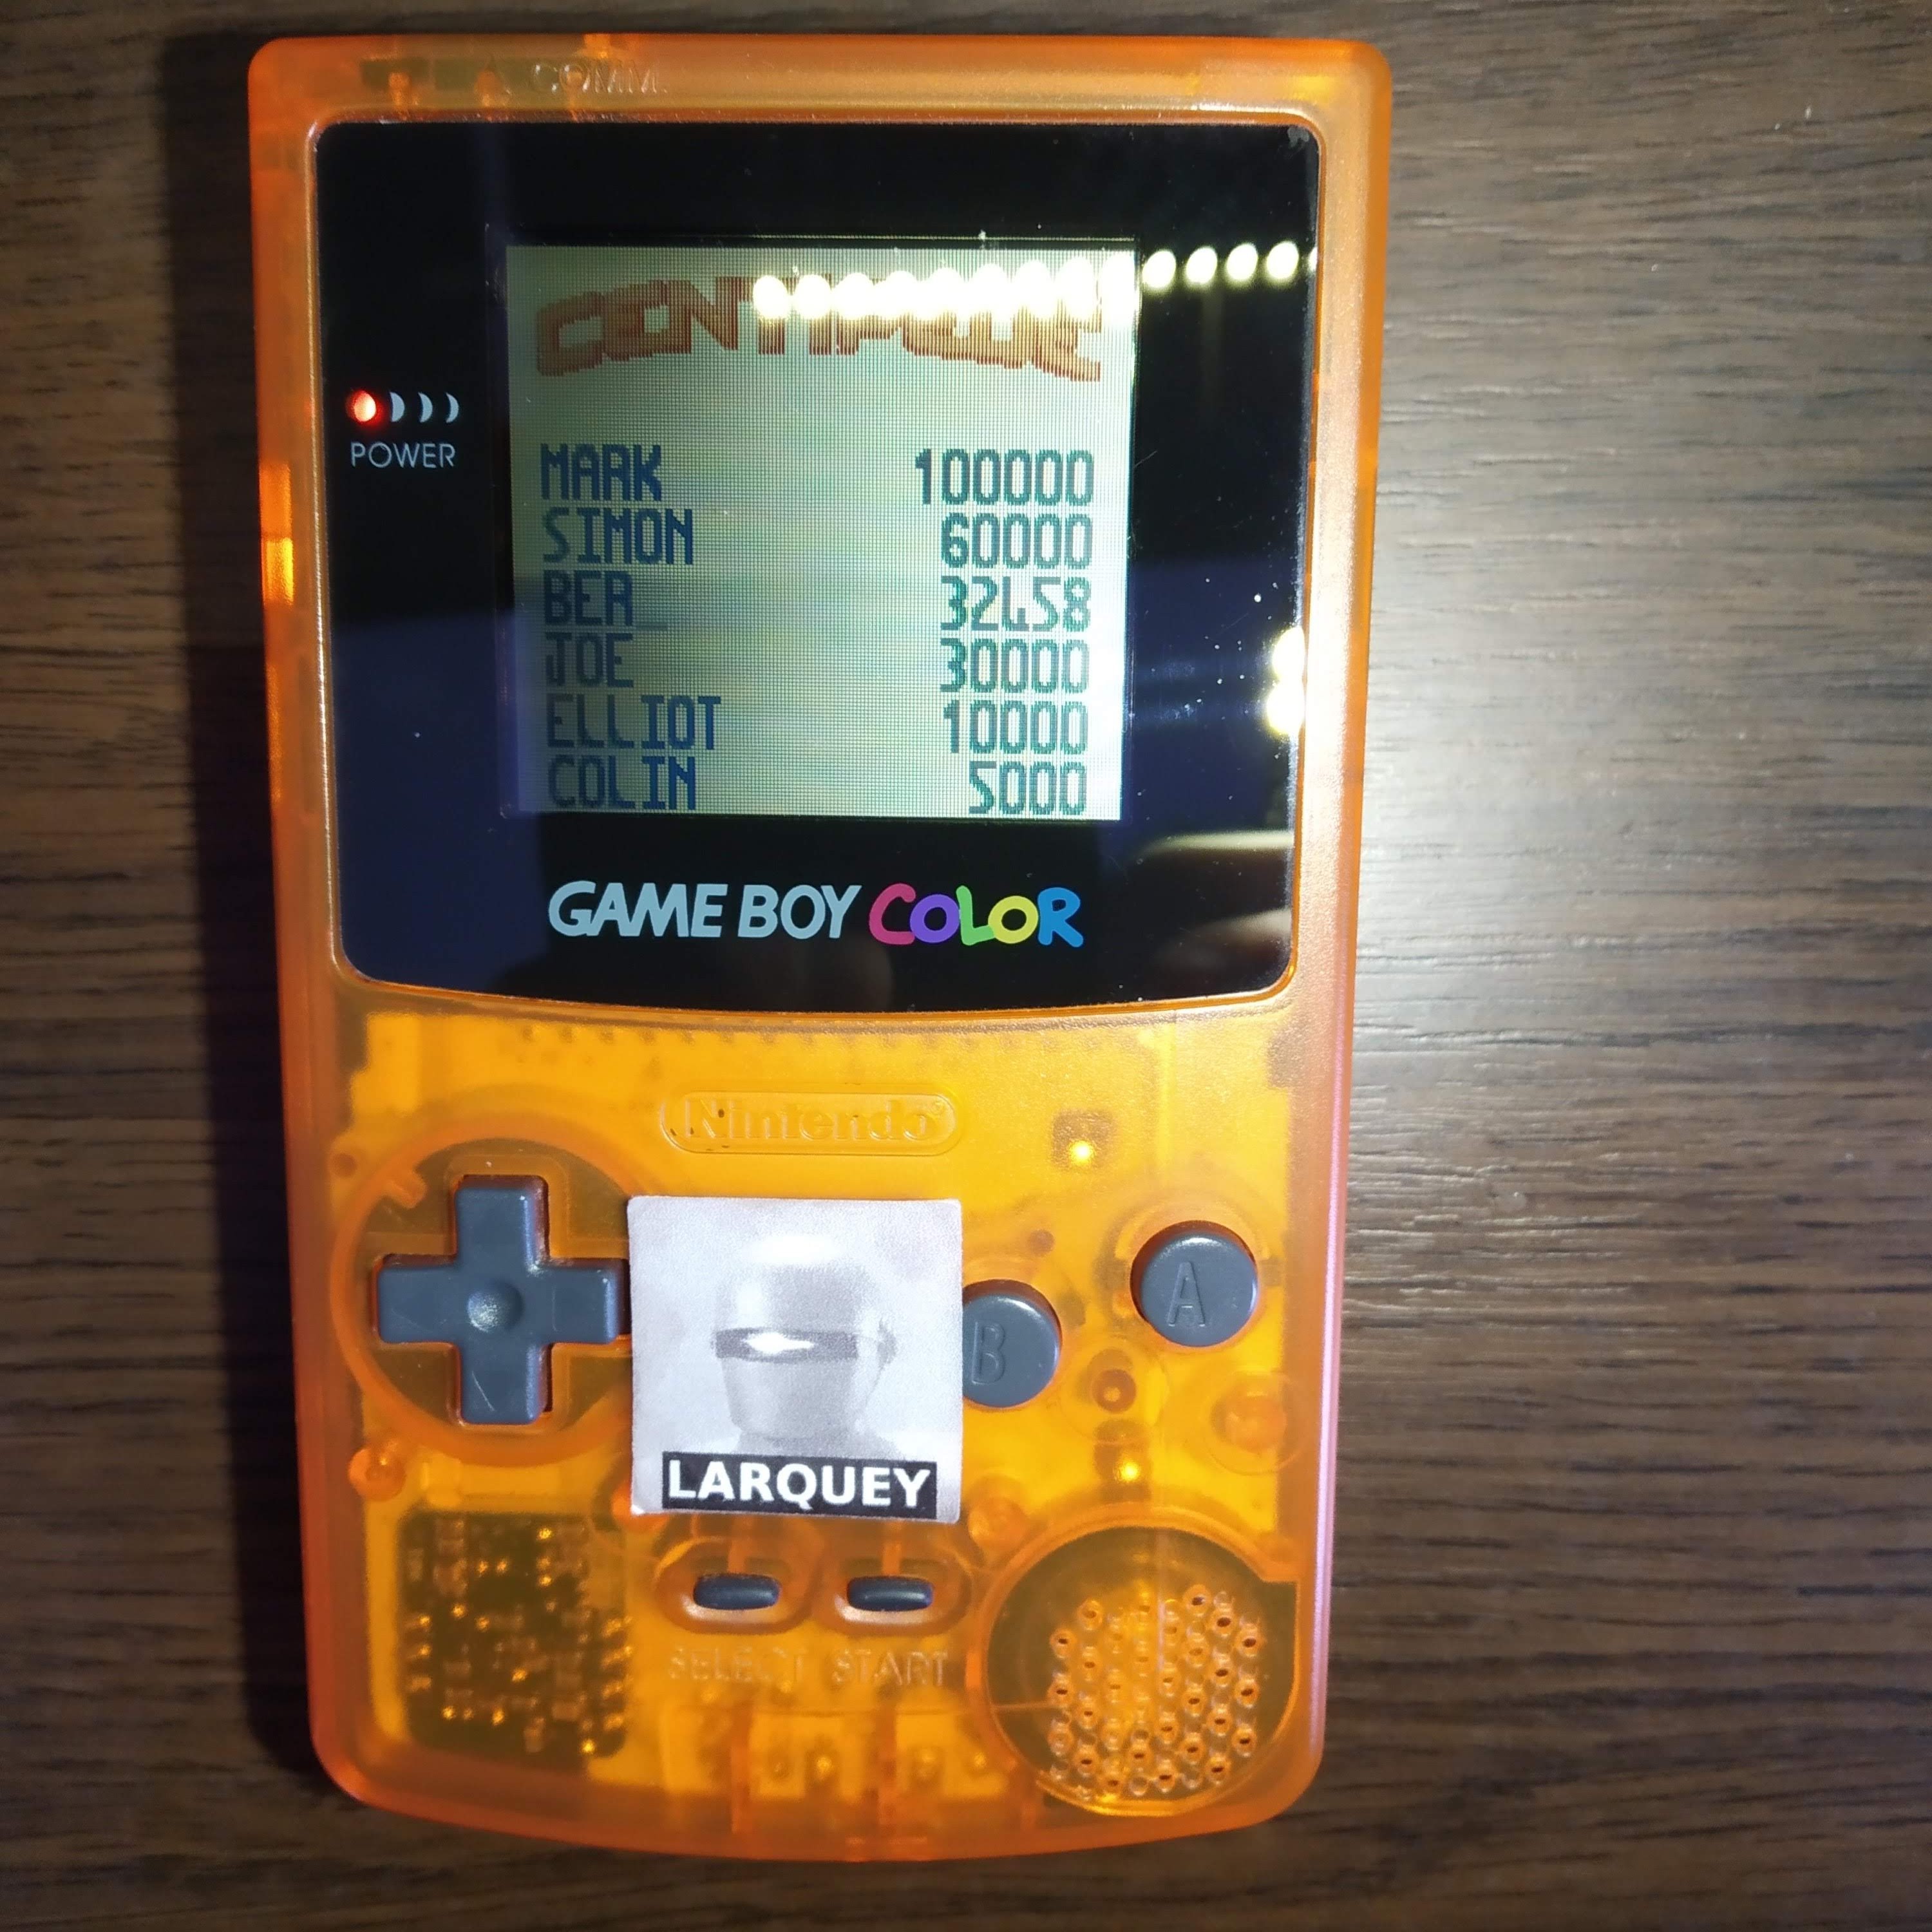 Larquey: Centipede (Game Boy Color) 32,458 points on 2020-06-11 10:48:39